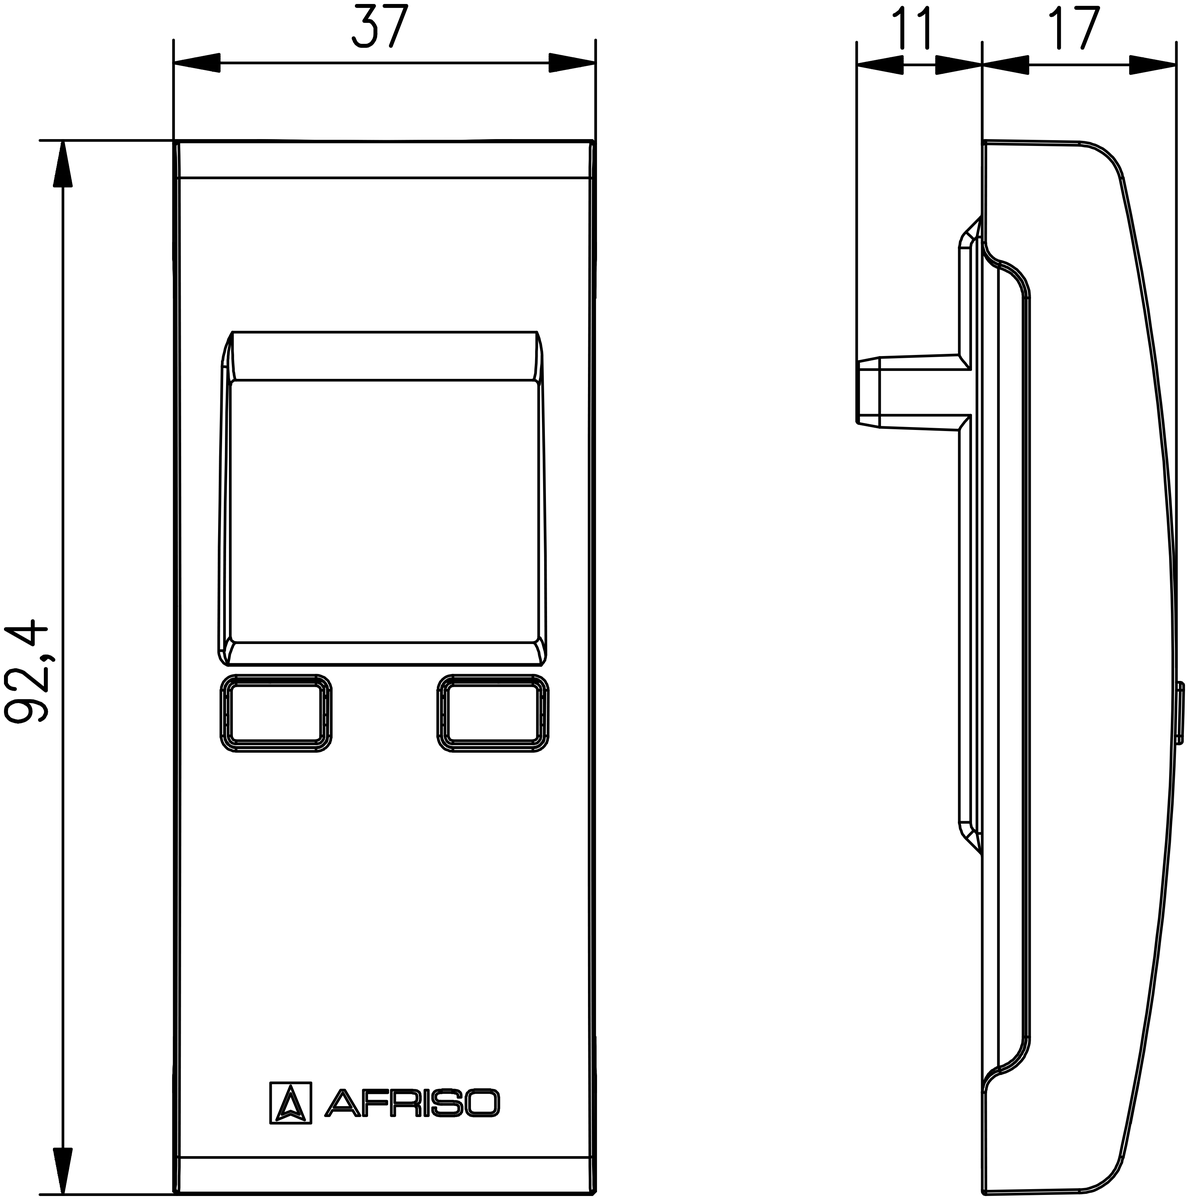 AFRISO Uhr-Modul UM für Basismodul BM BEF 8460